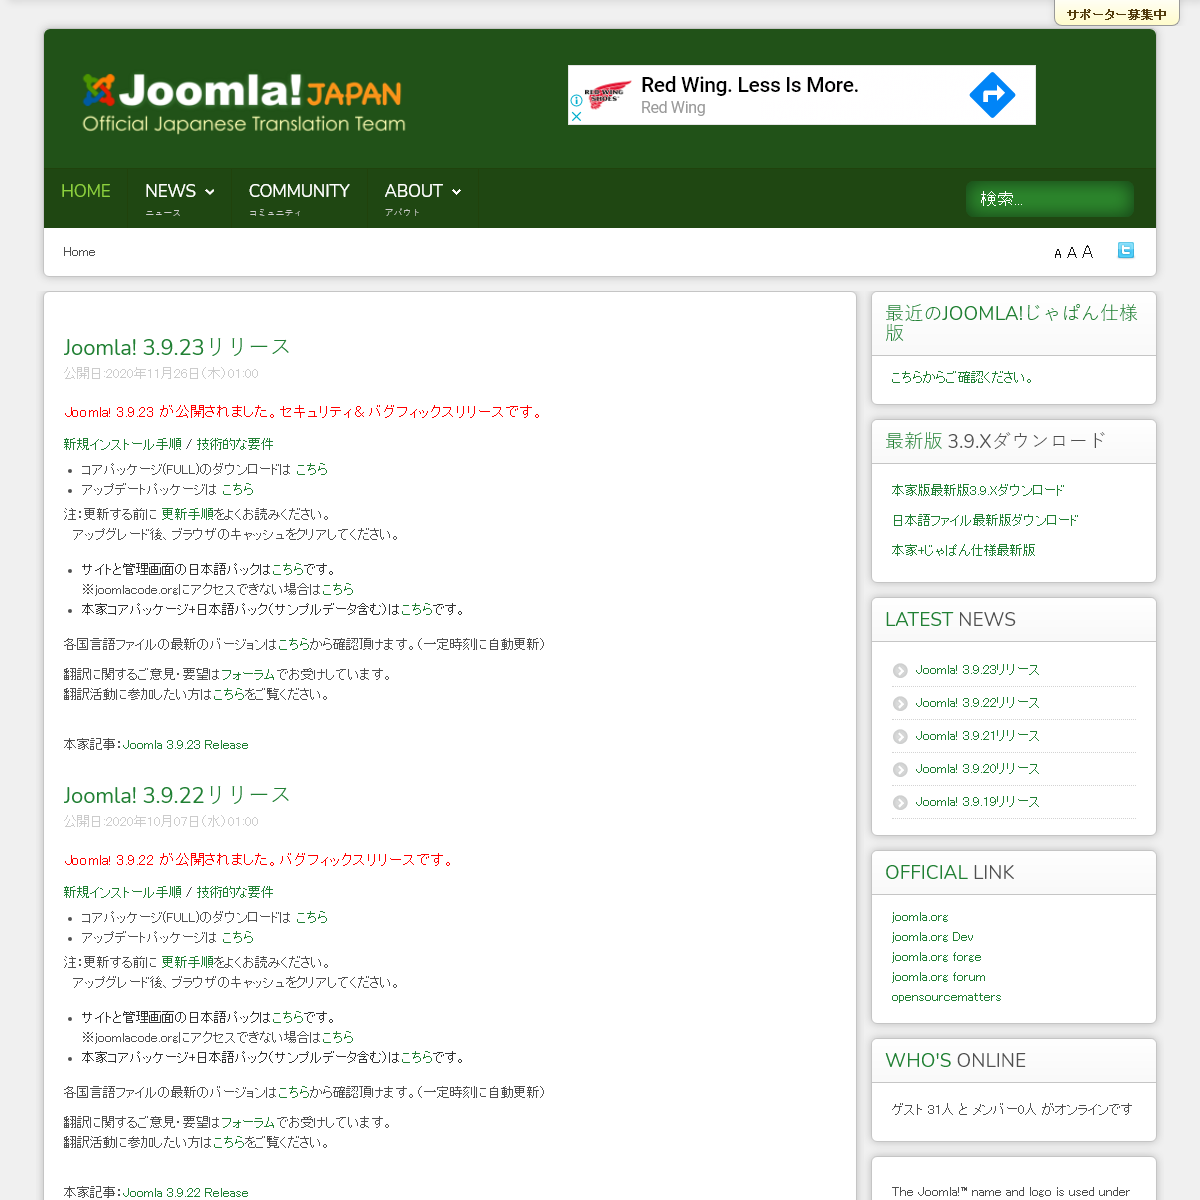 A complete backup of joomla.jp